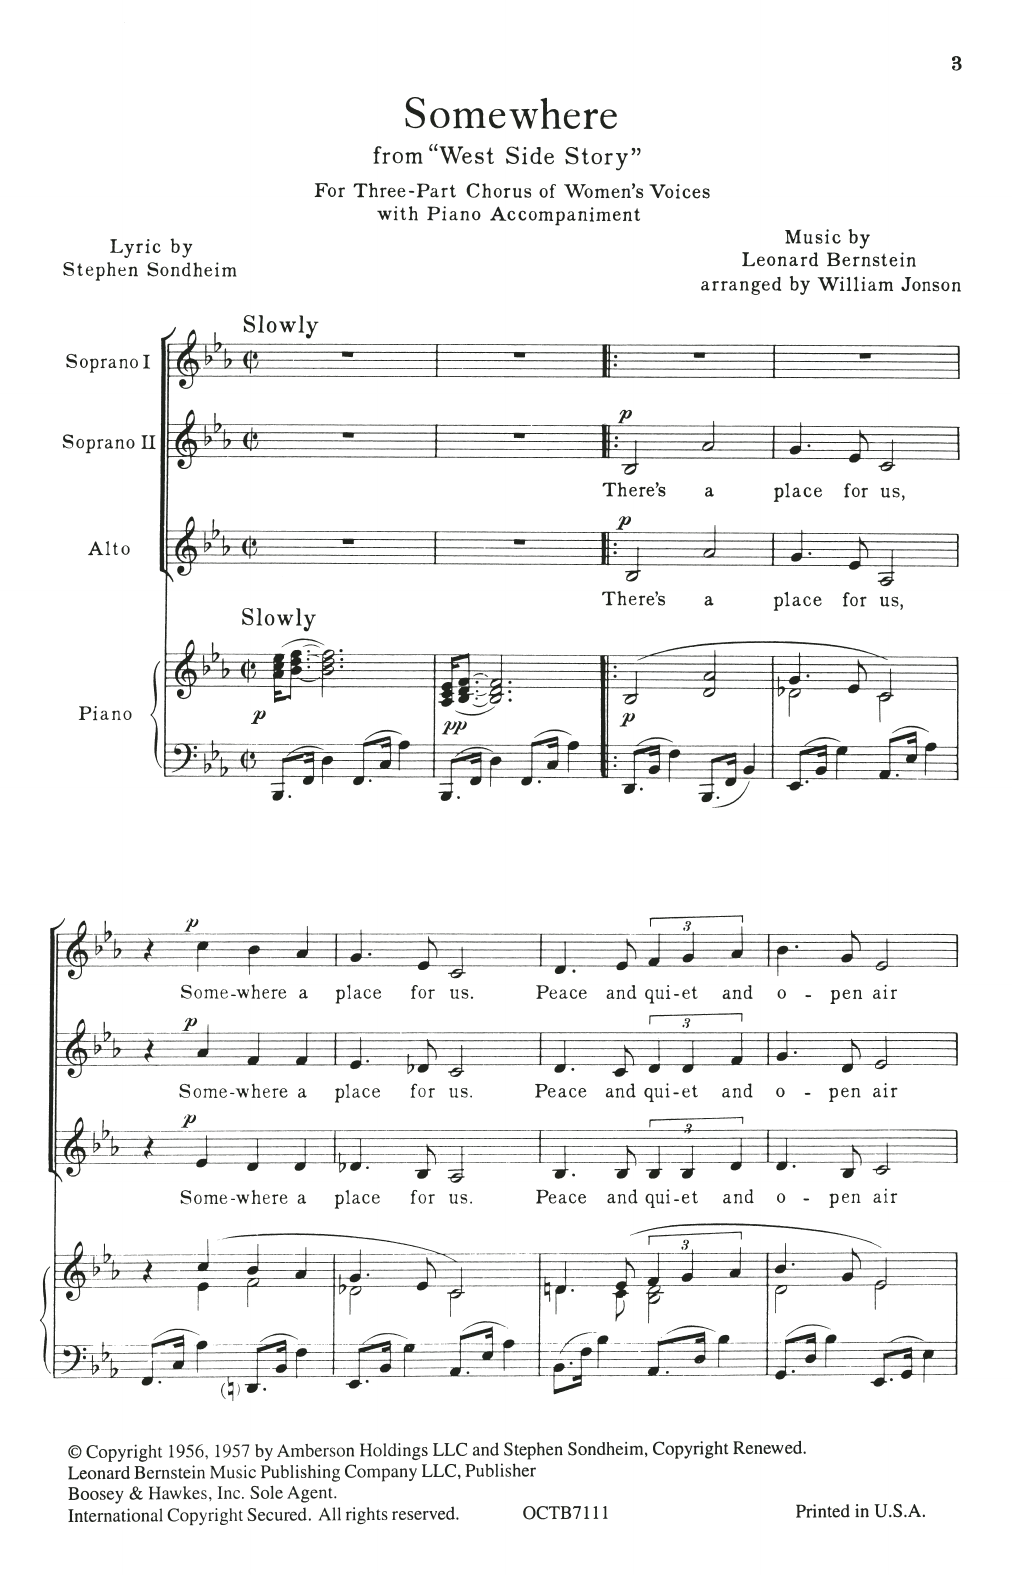 Download Leonard Bernstein & Stephen Sondheim Somewhere (from West Side Story) (arr. William Jonson) Sheet Music and learn how to play SSA Choir PDF digital score in minutes